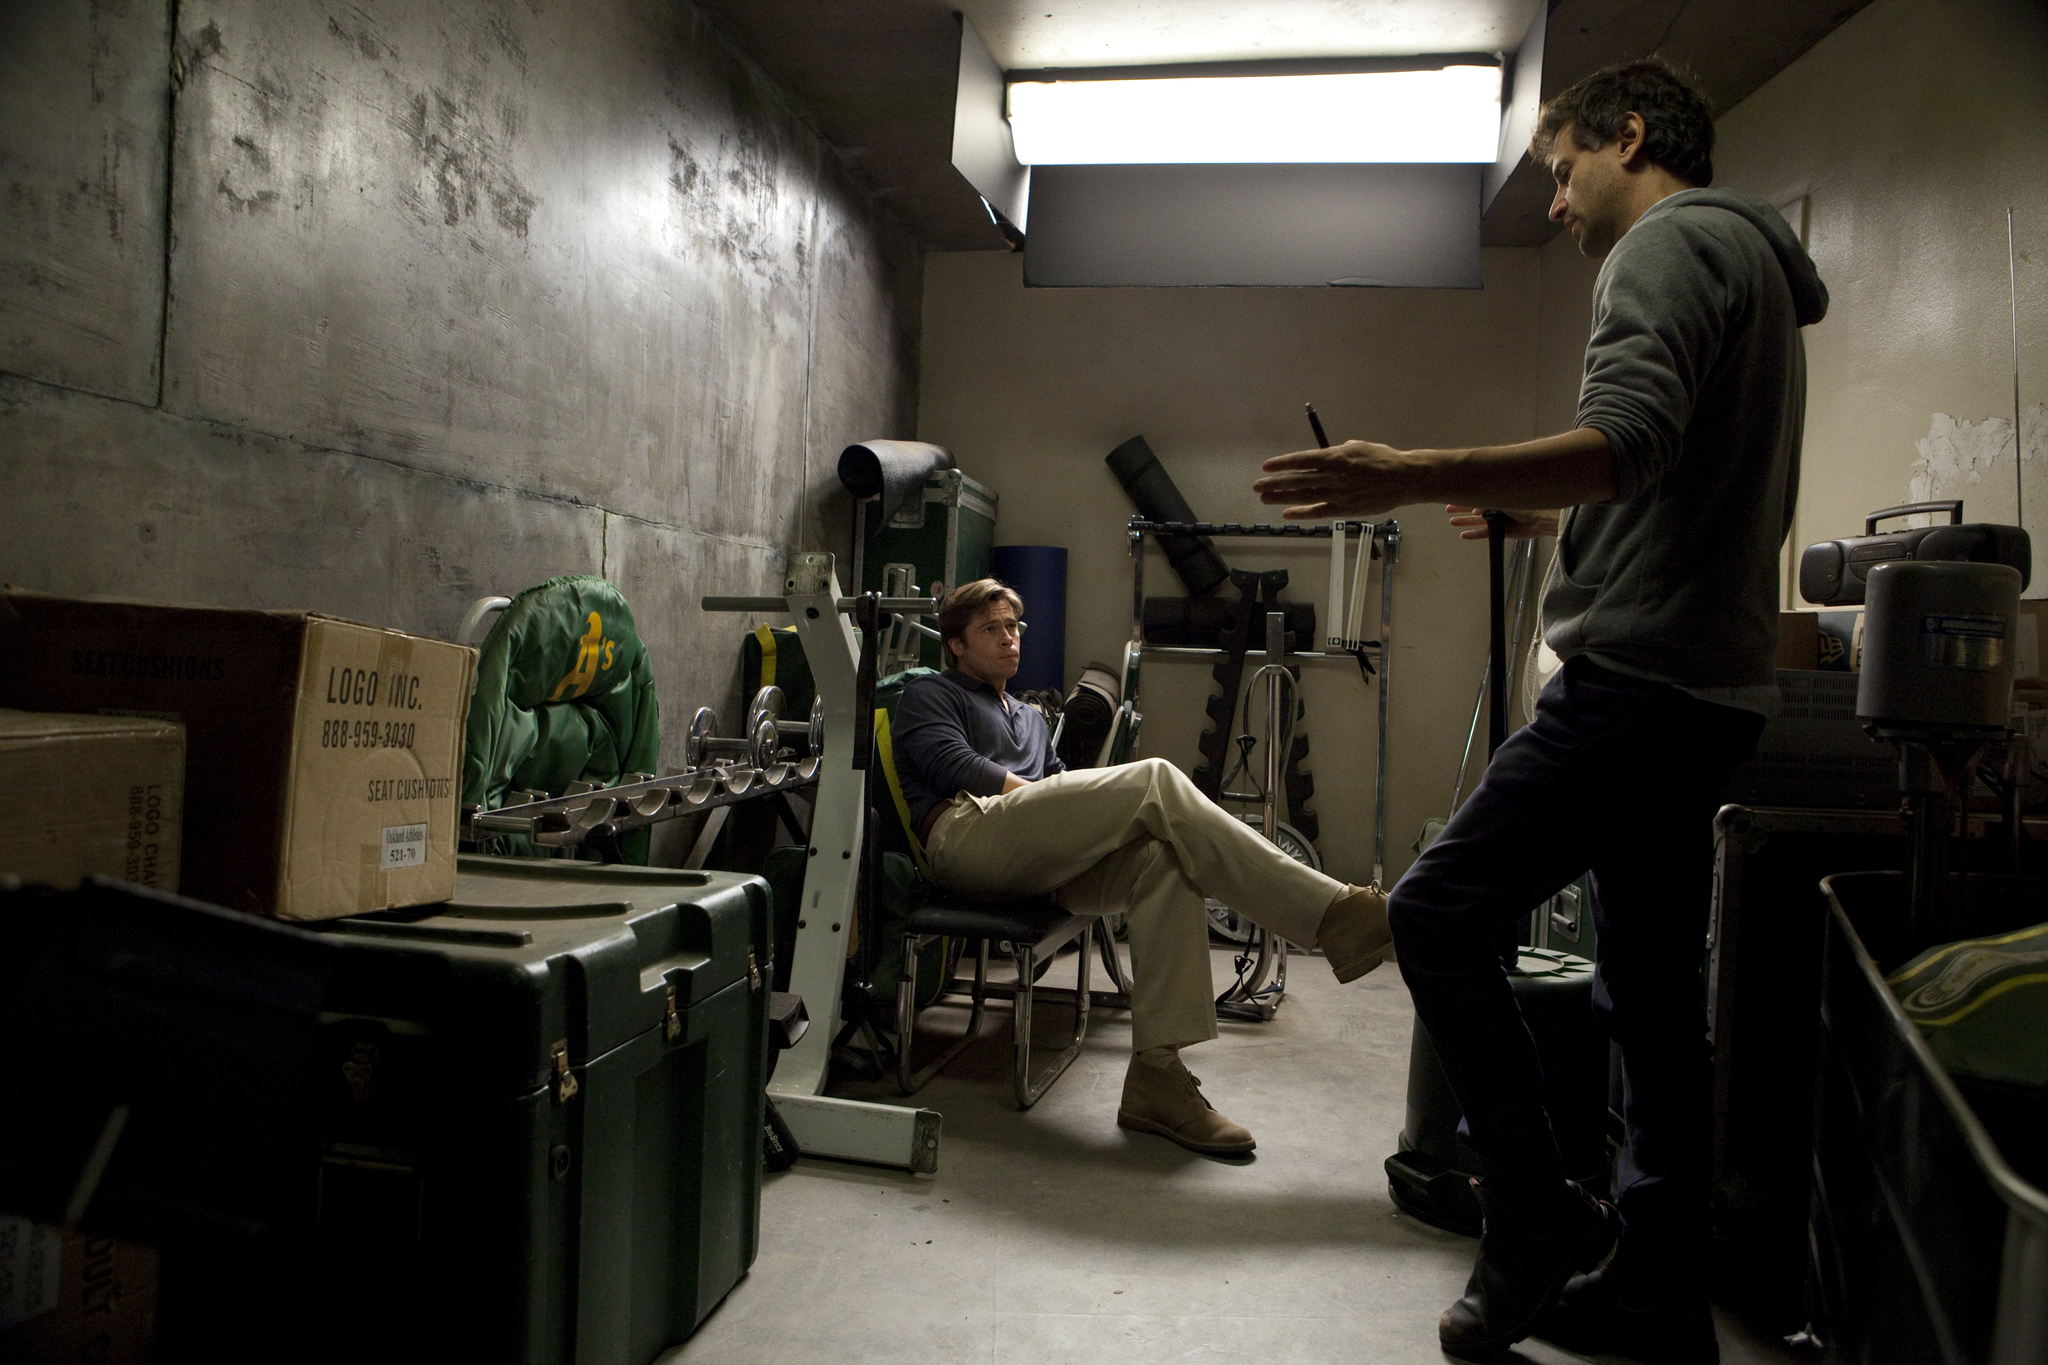 Brad Pitt and Bennett Miller in Zmogus, pakeites viska (2011)